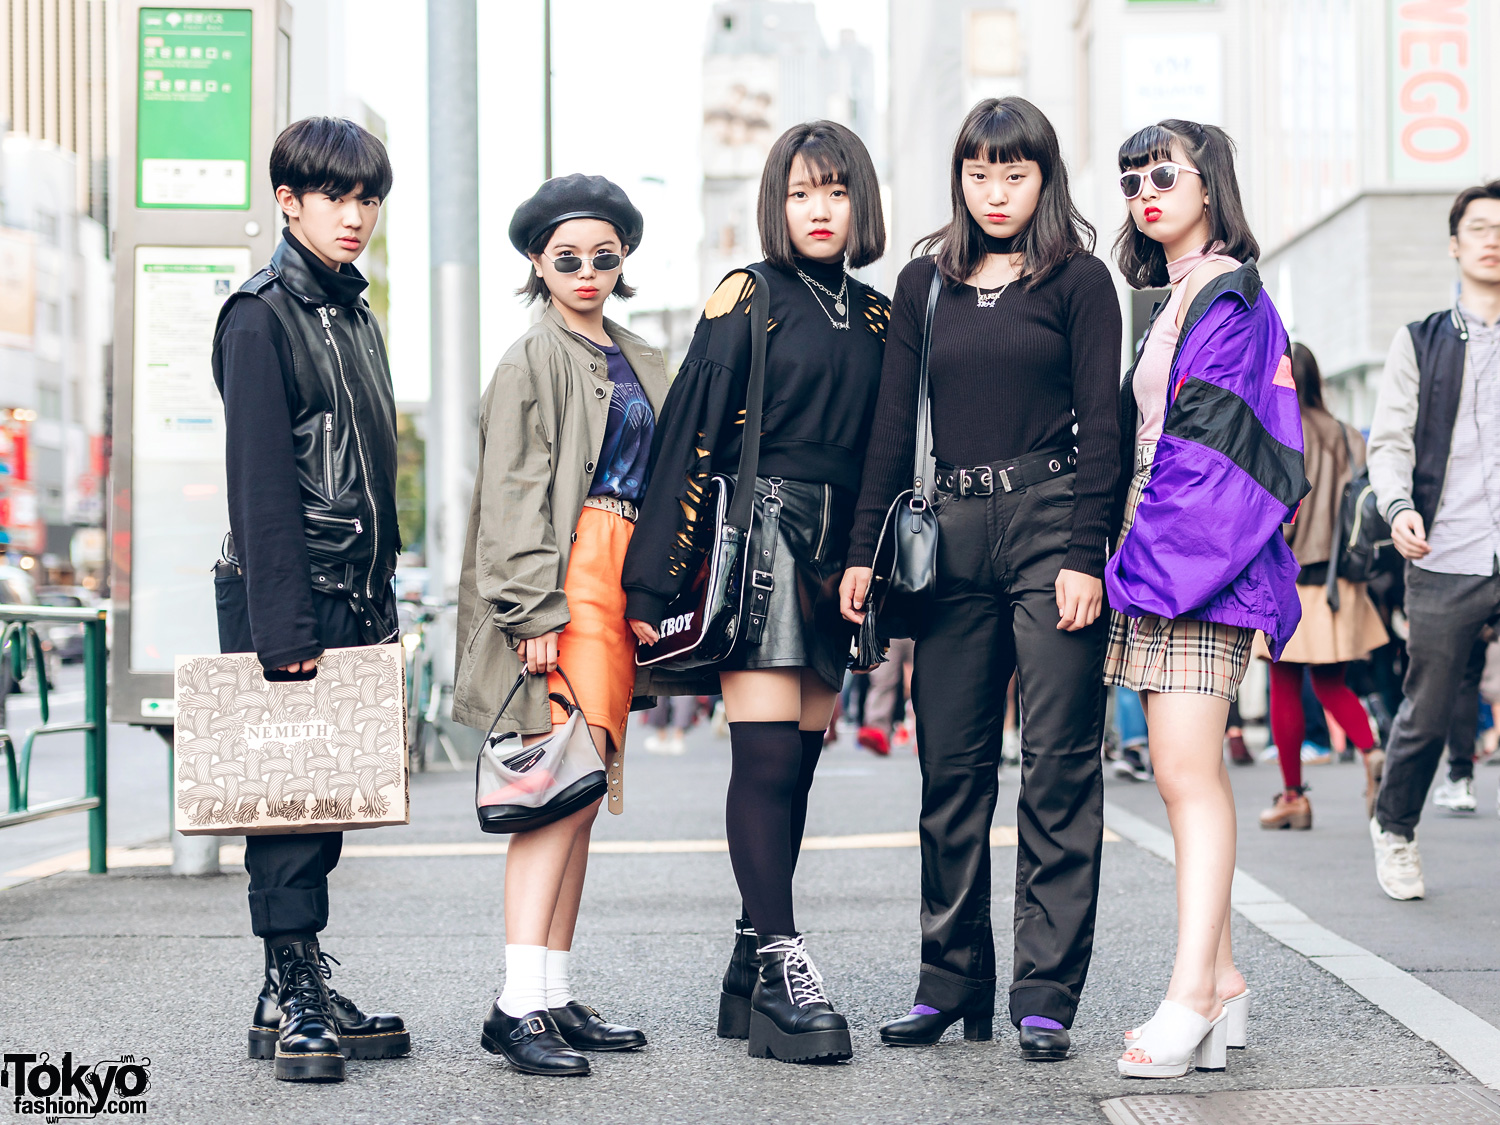 Harajuku Teen Group in Black & Eclectic Streetwear Fashion Styles